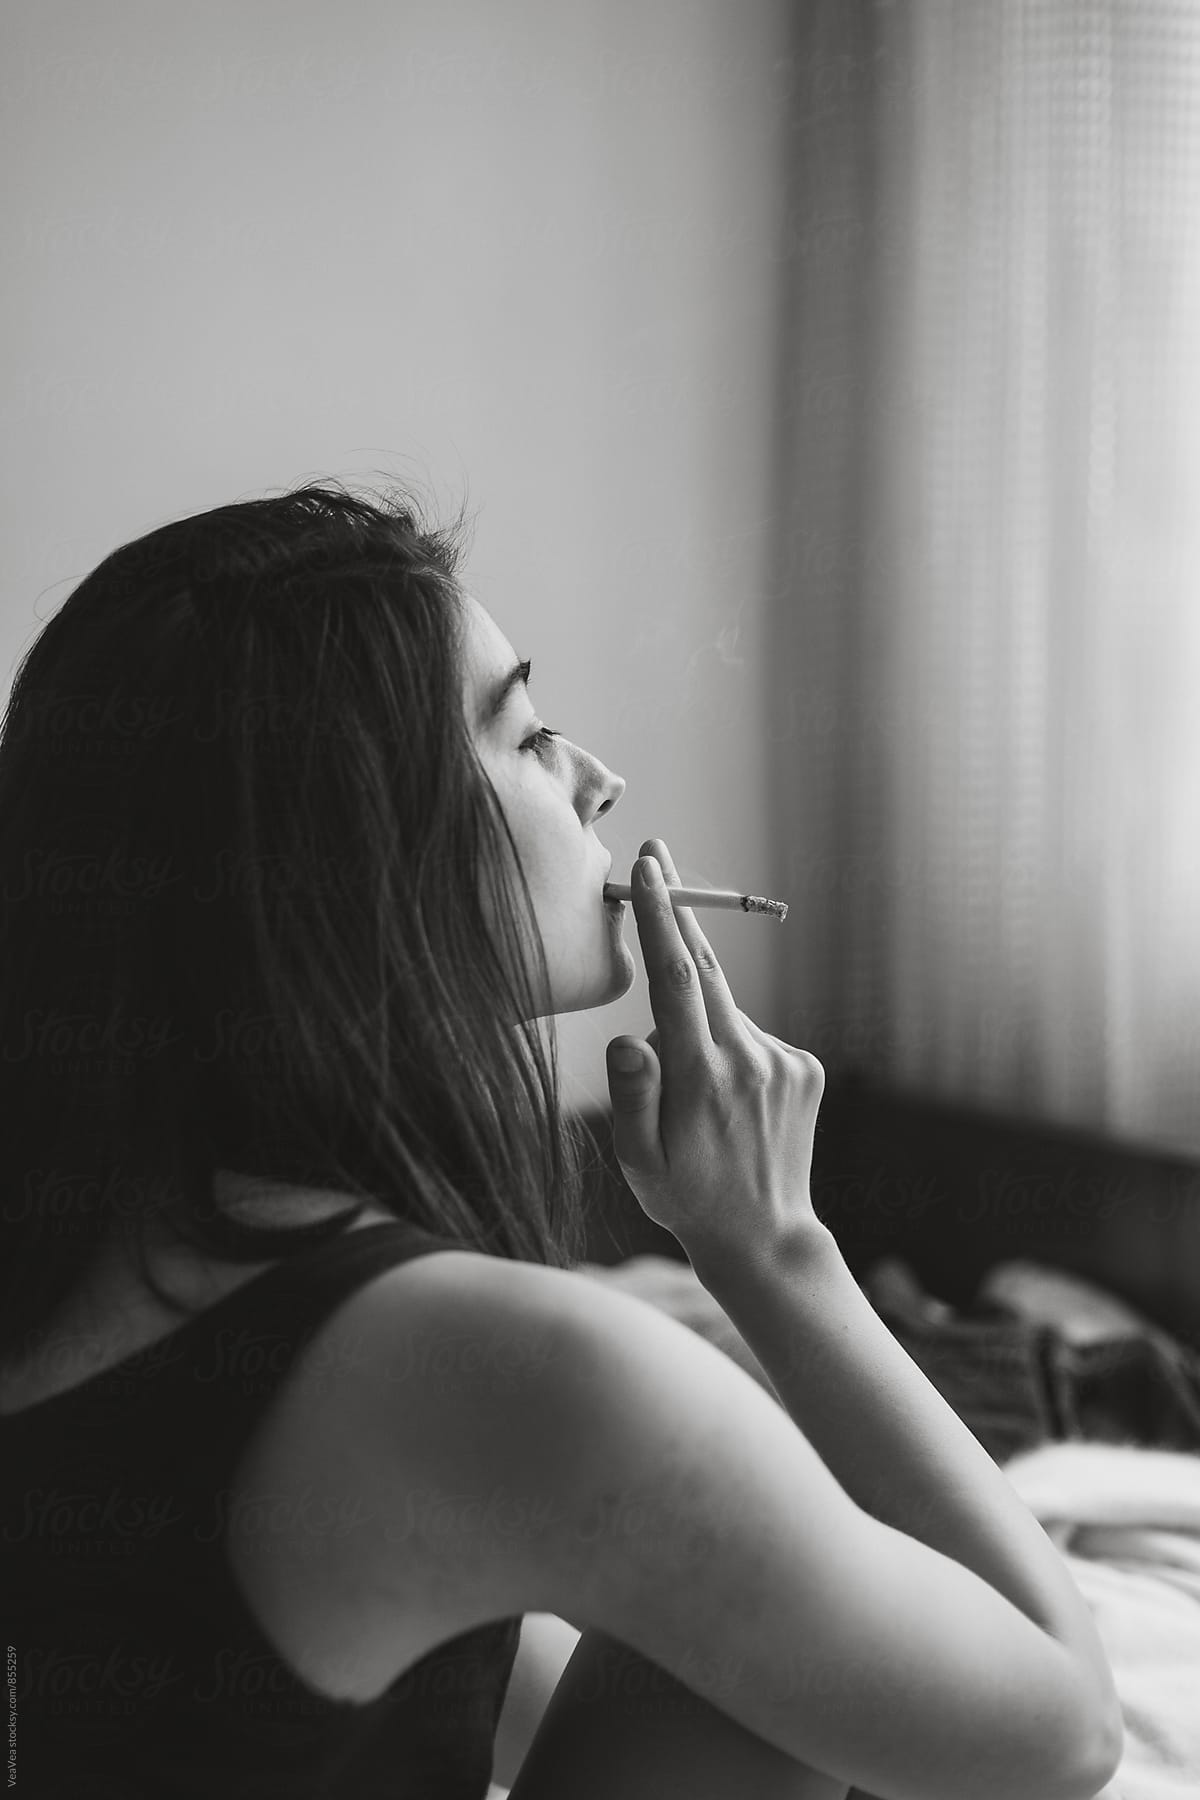 Beautiful woman smoking a cigarette indoor